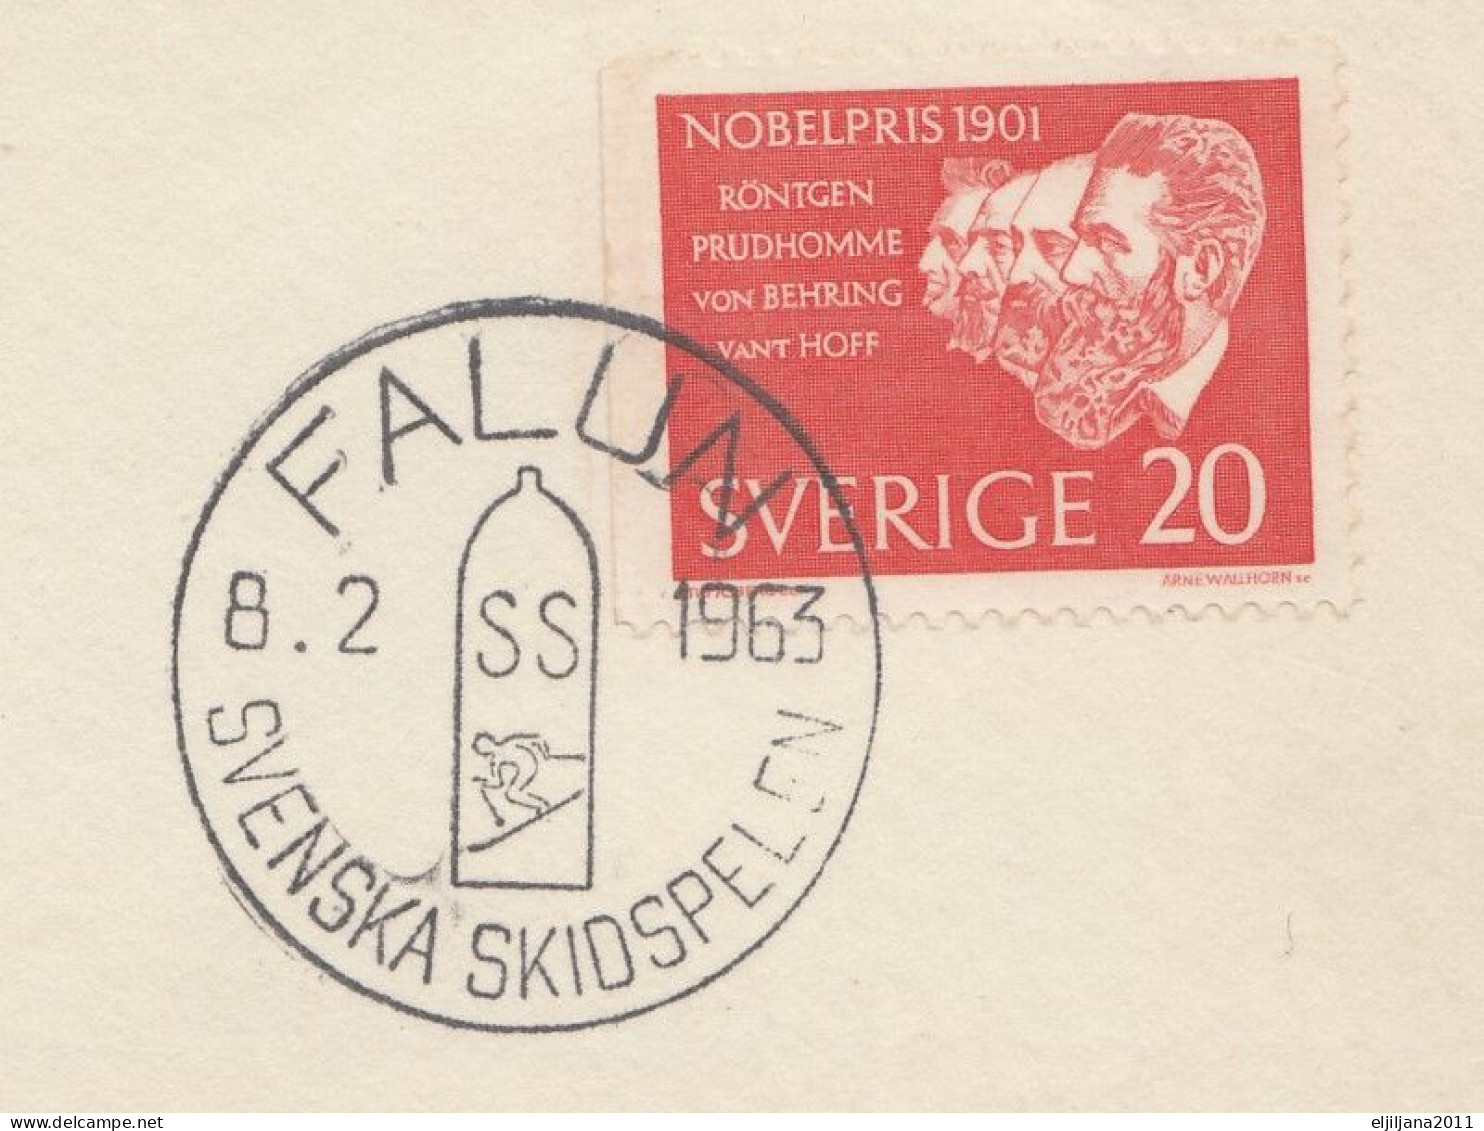 Action !! SALE !! 50 % OFF !! ⁕ Sweden / Sverige 1963  Skiing FALUN, SUNDSVALL, LULEA  3v Covers - Briefe U. Dokumente